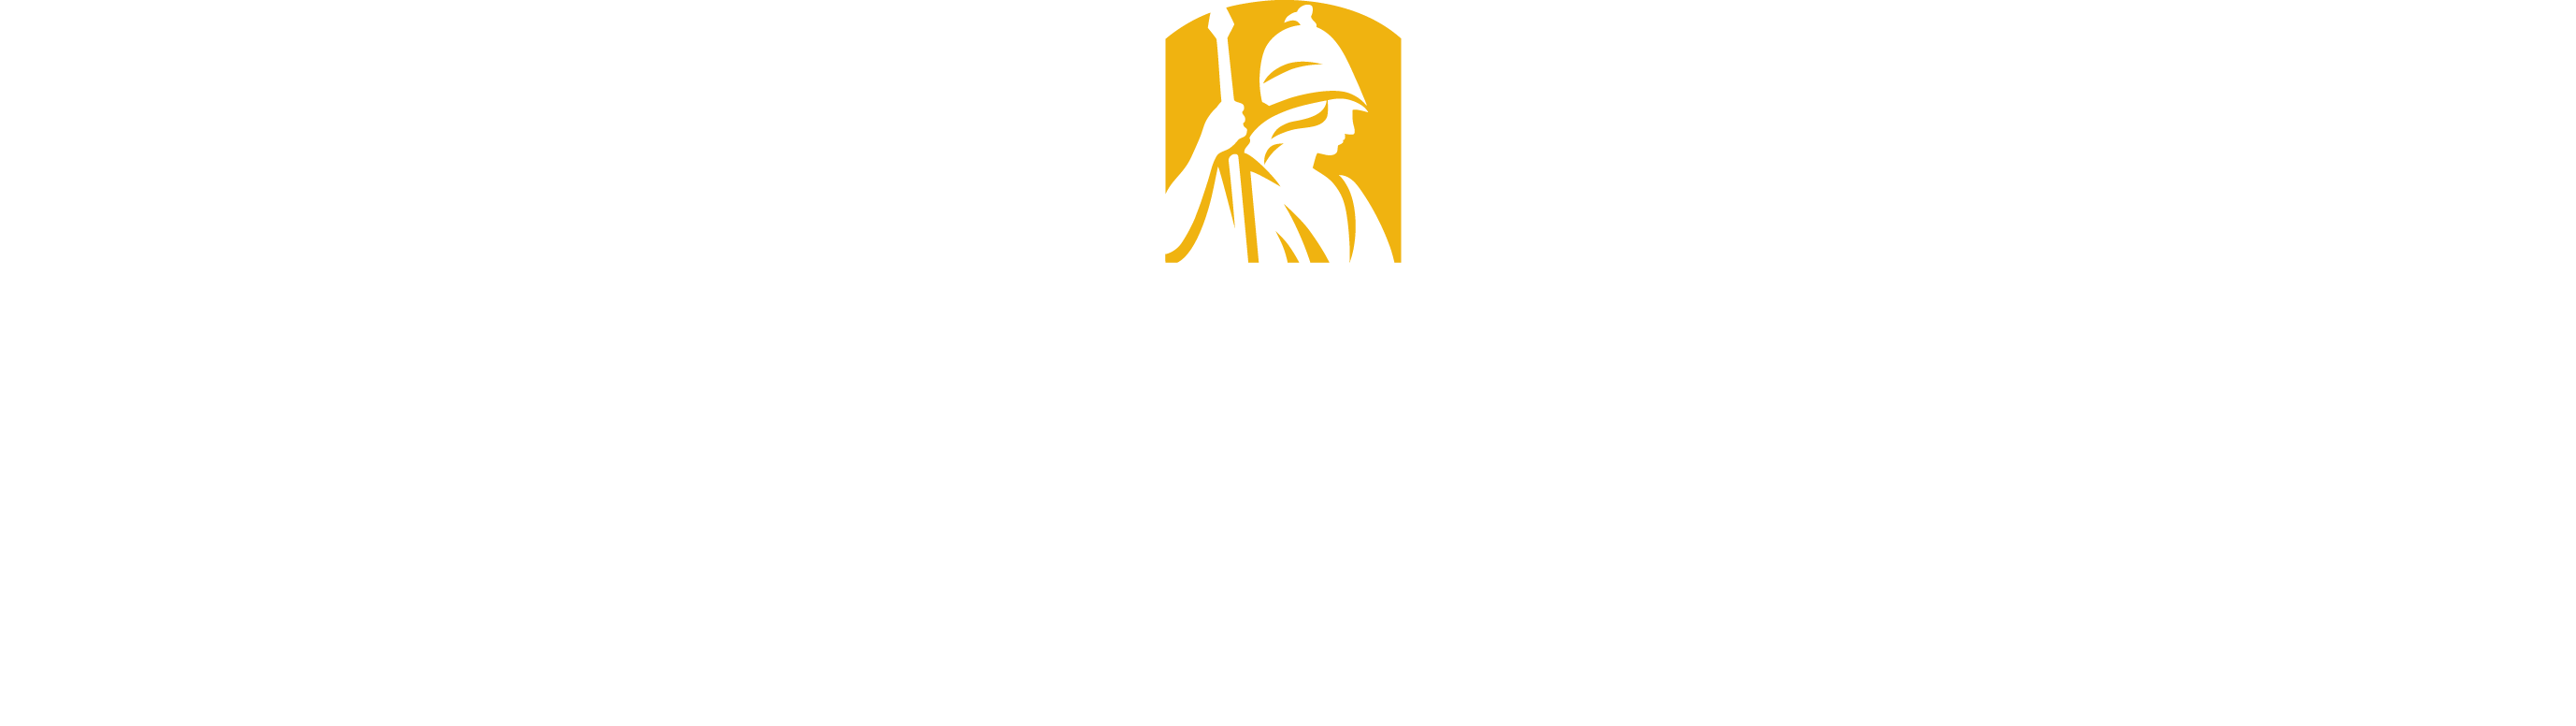 School of Public Health University at Albany State University of New York